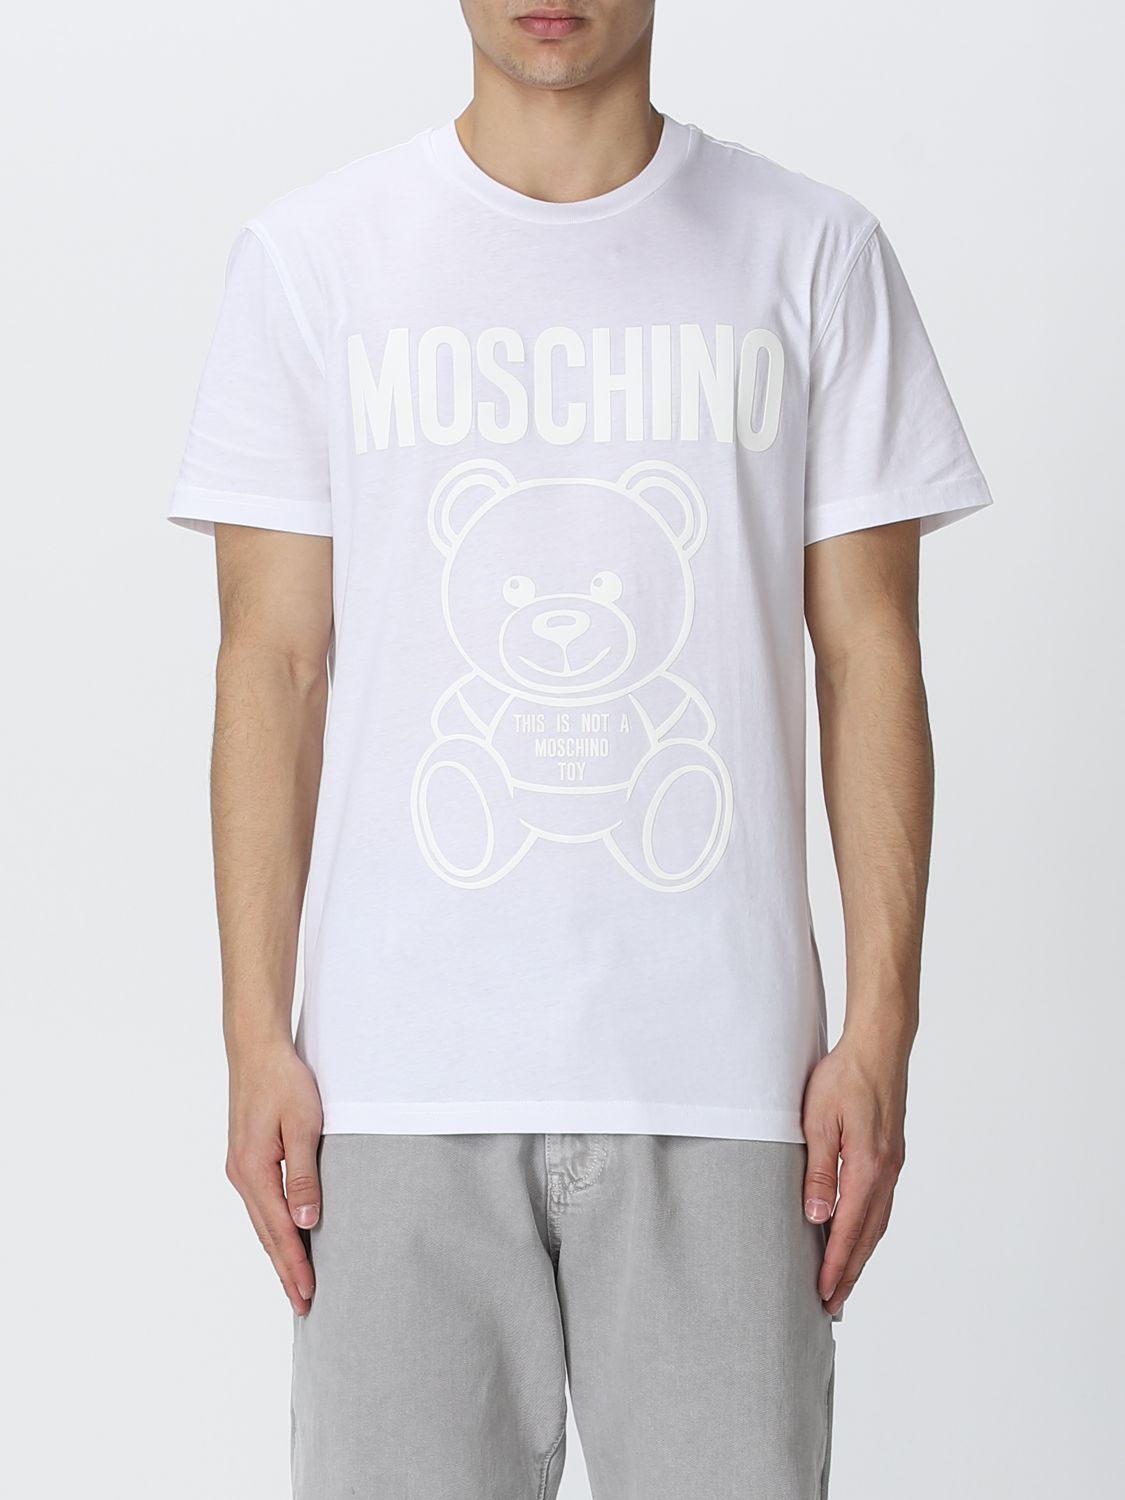 Moschino Couture T-shirt  Men Colour Grey